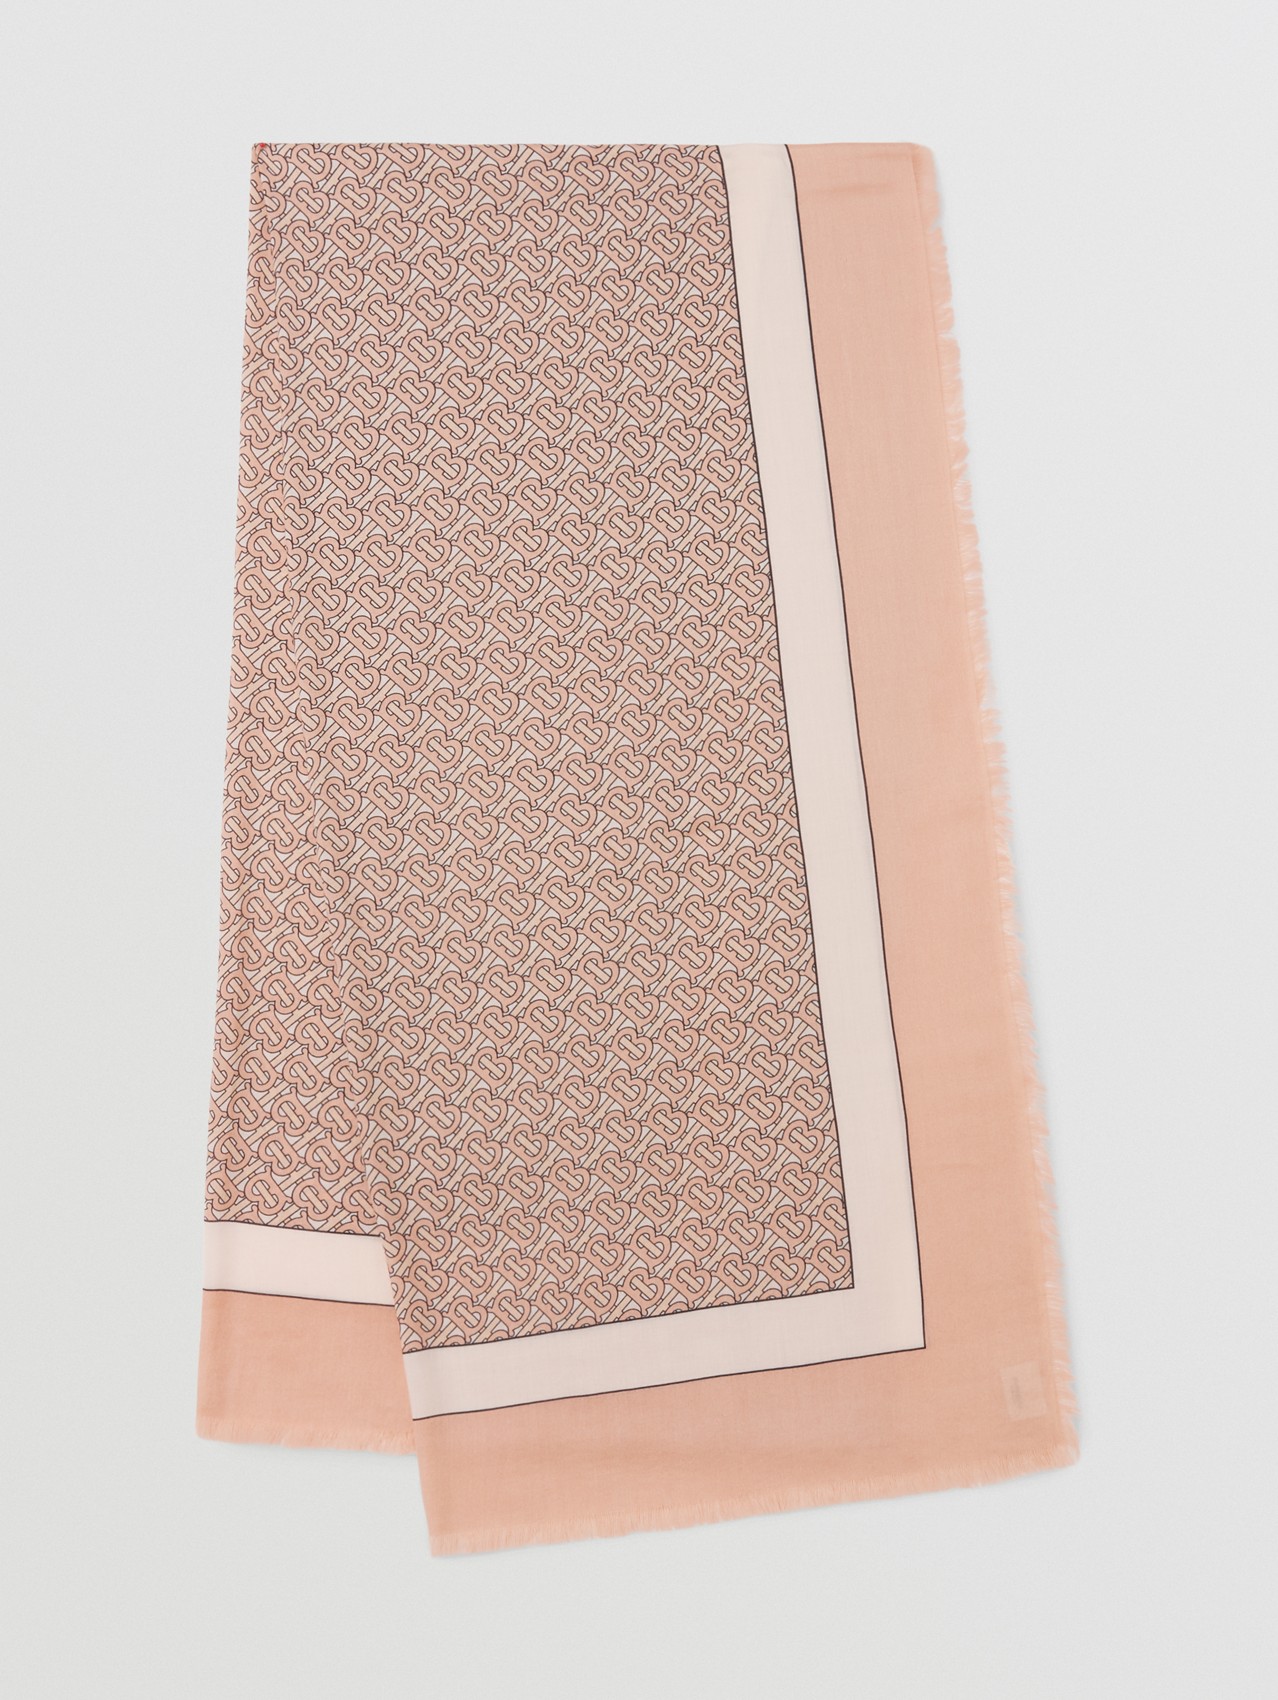 Monogram Print Lightweight Cashmere Scarf in Pale Copper Pink